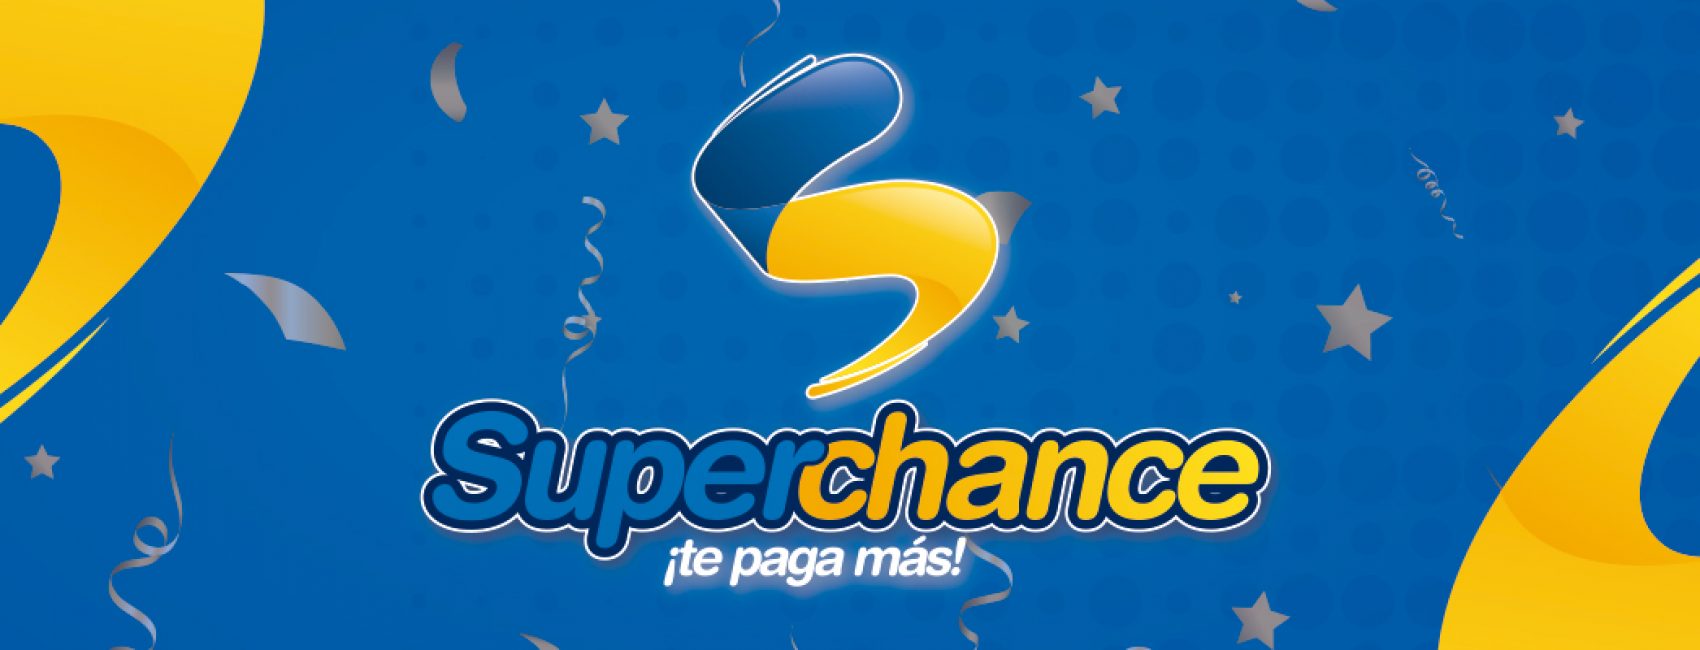 Super chance banner